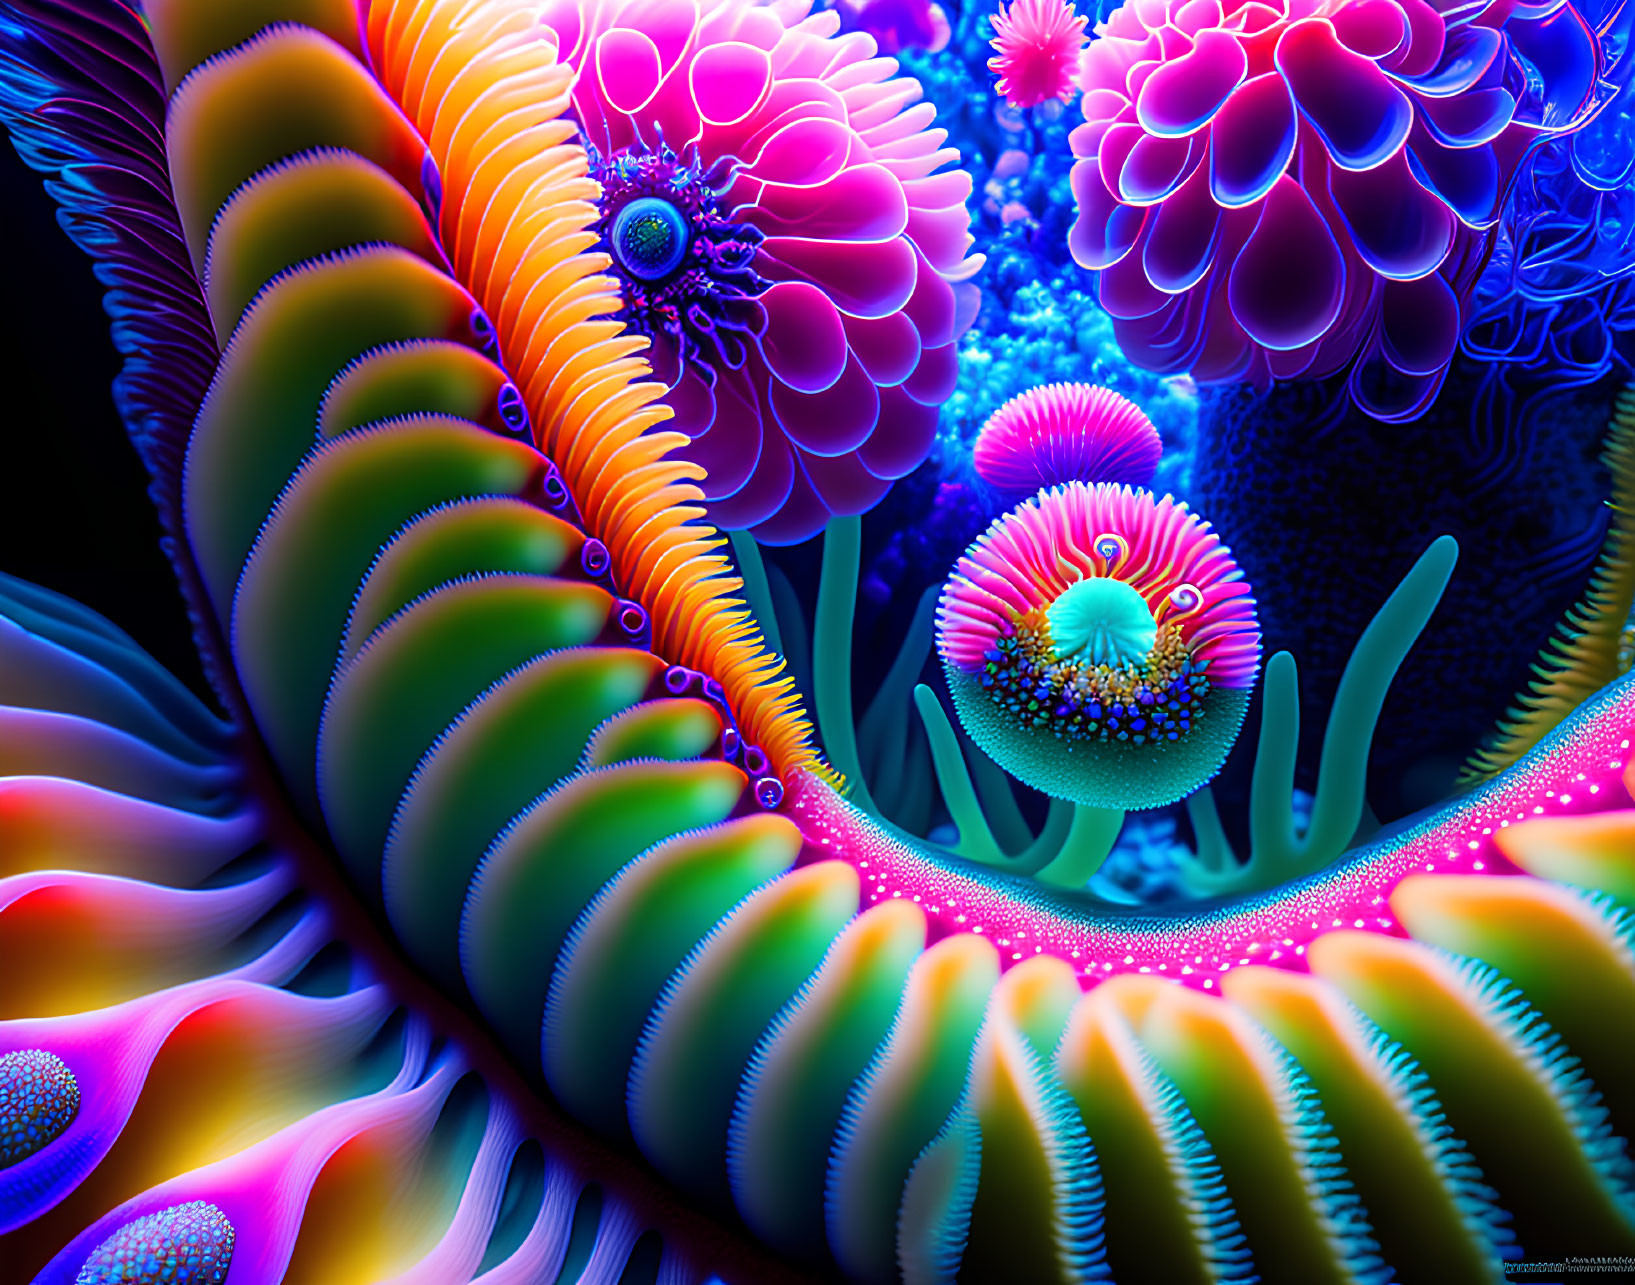 Colorful Digital Art: Neon Sea Anemones and Coral in Underwater Scene